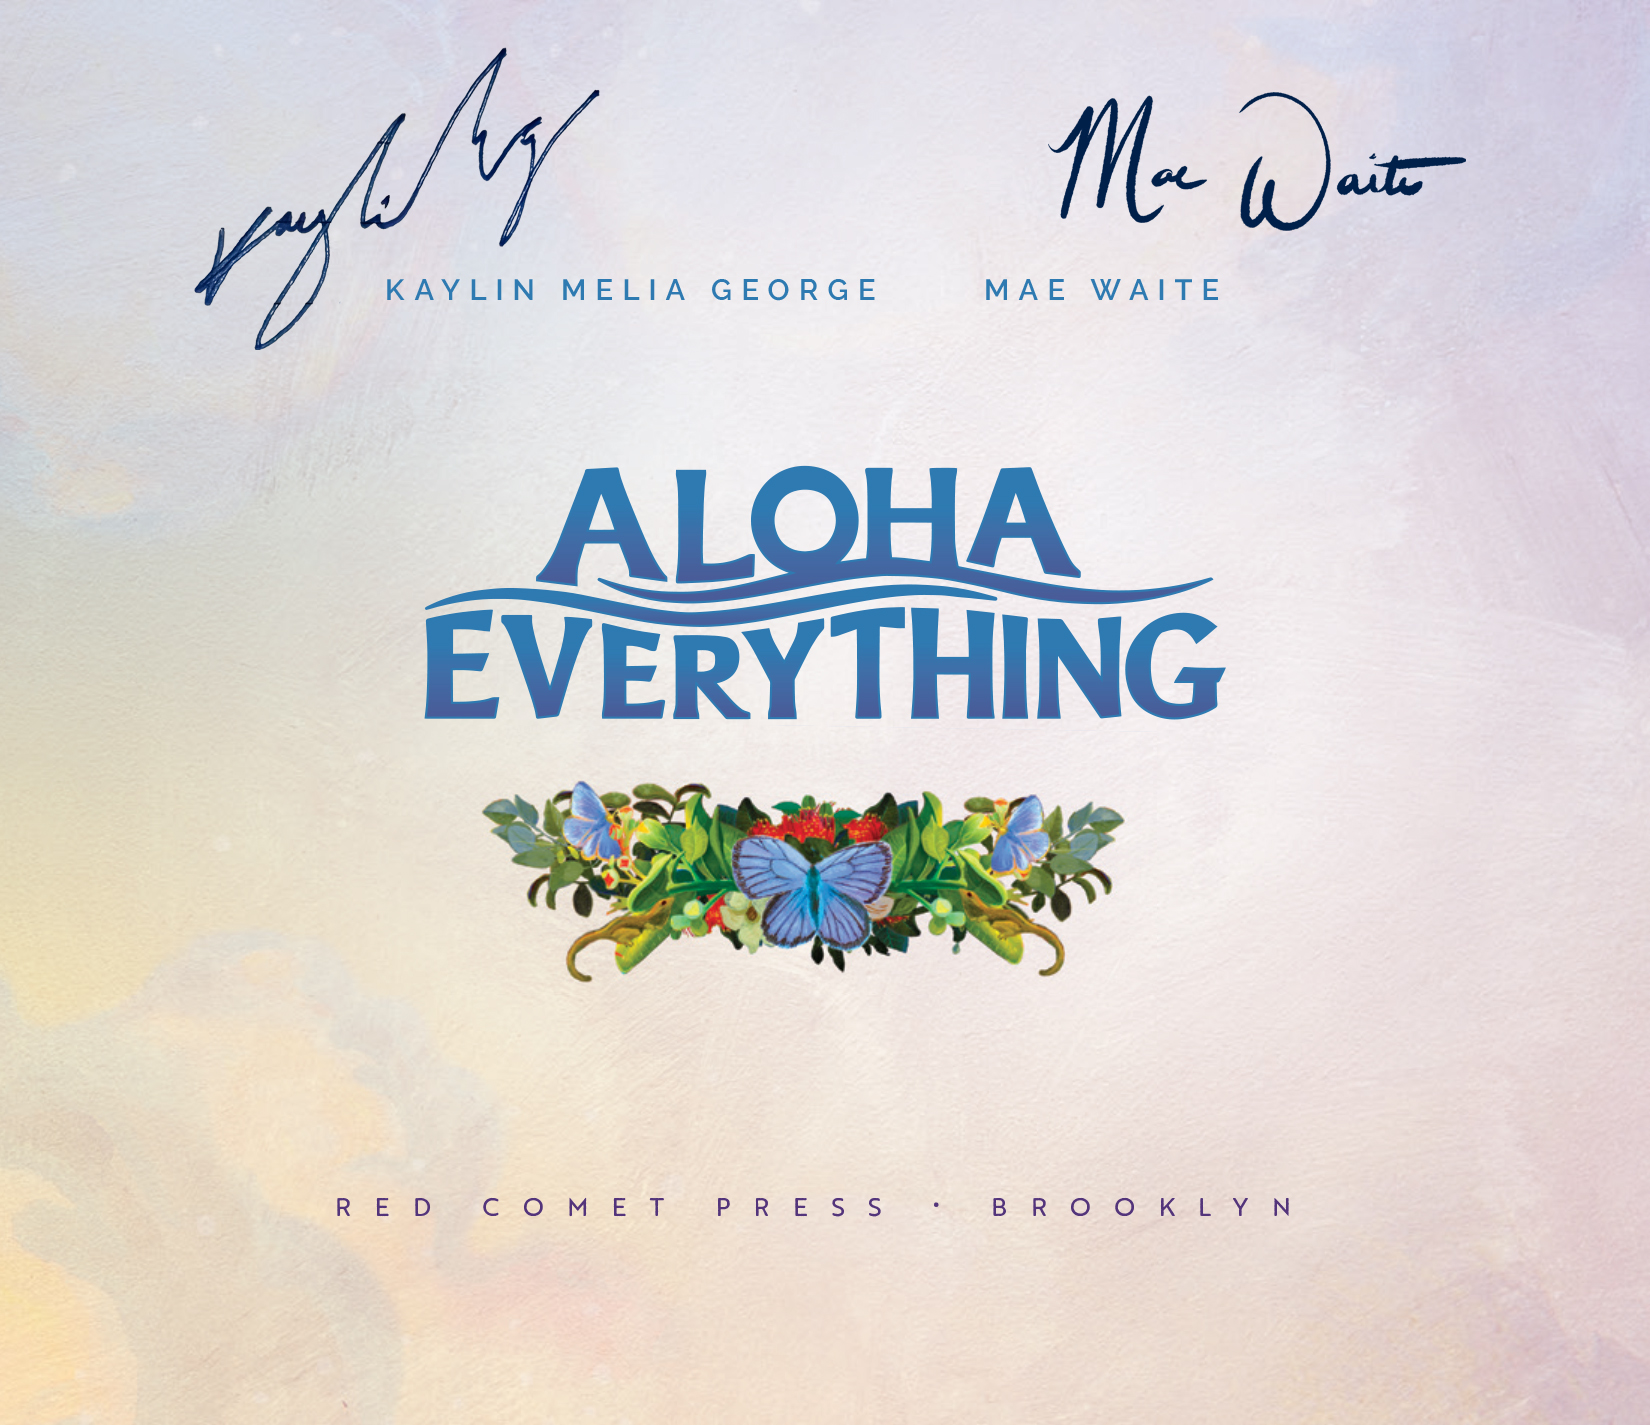 The title page of Aloha Everything signed by Kaylin Melia George and Mae Waite.